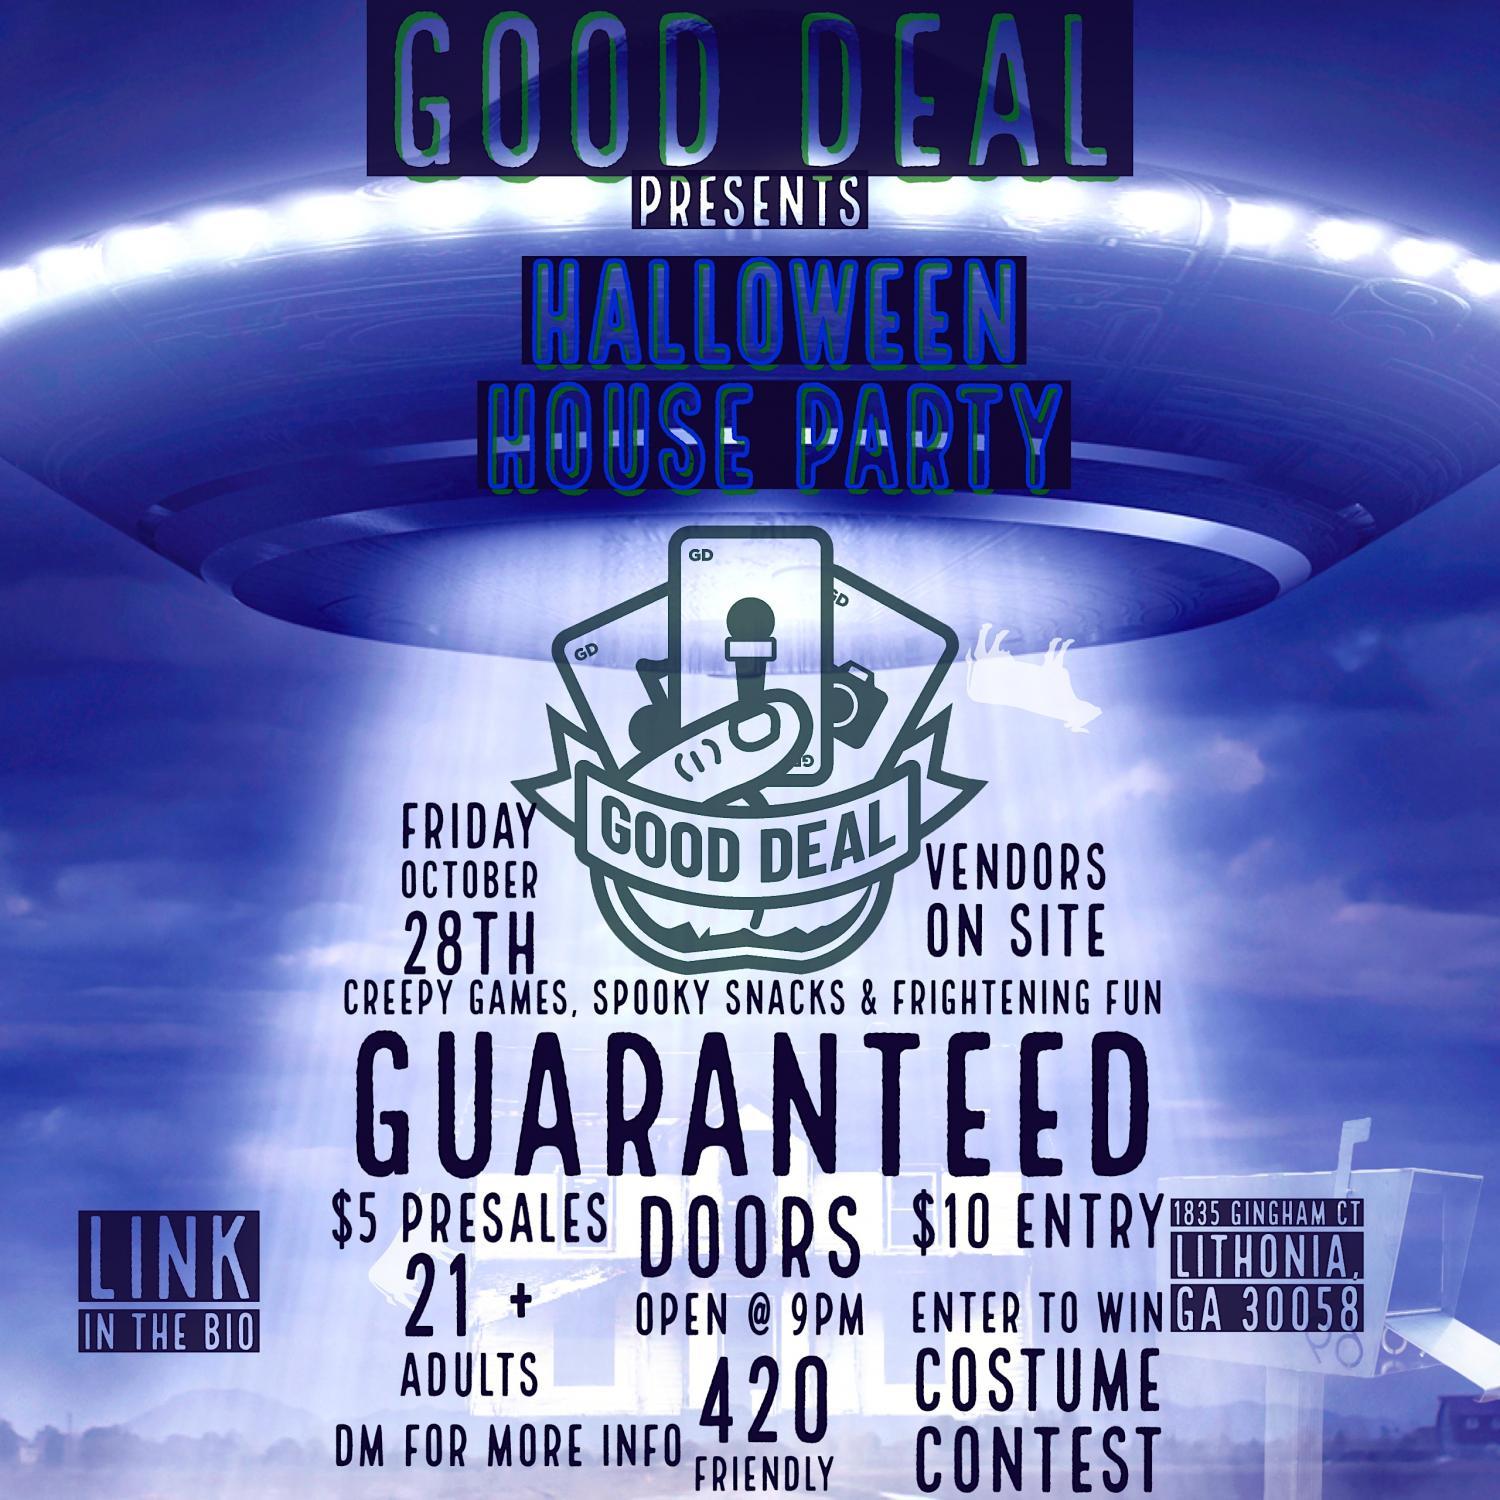 Good Deal Halloween Party
Fri Oct 28, 9:00 PM - Sat Oct 29, 12:00 AM
in 9 days